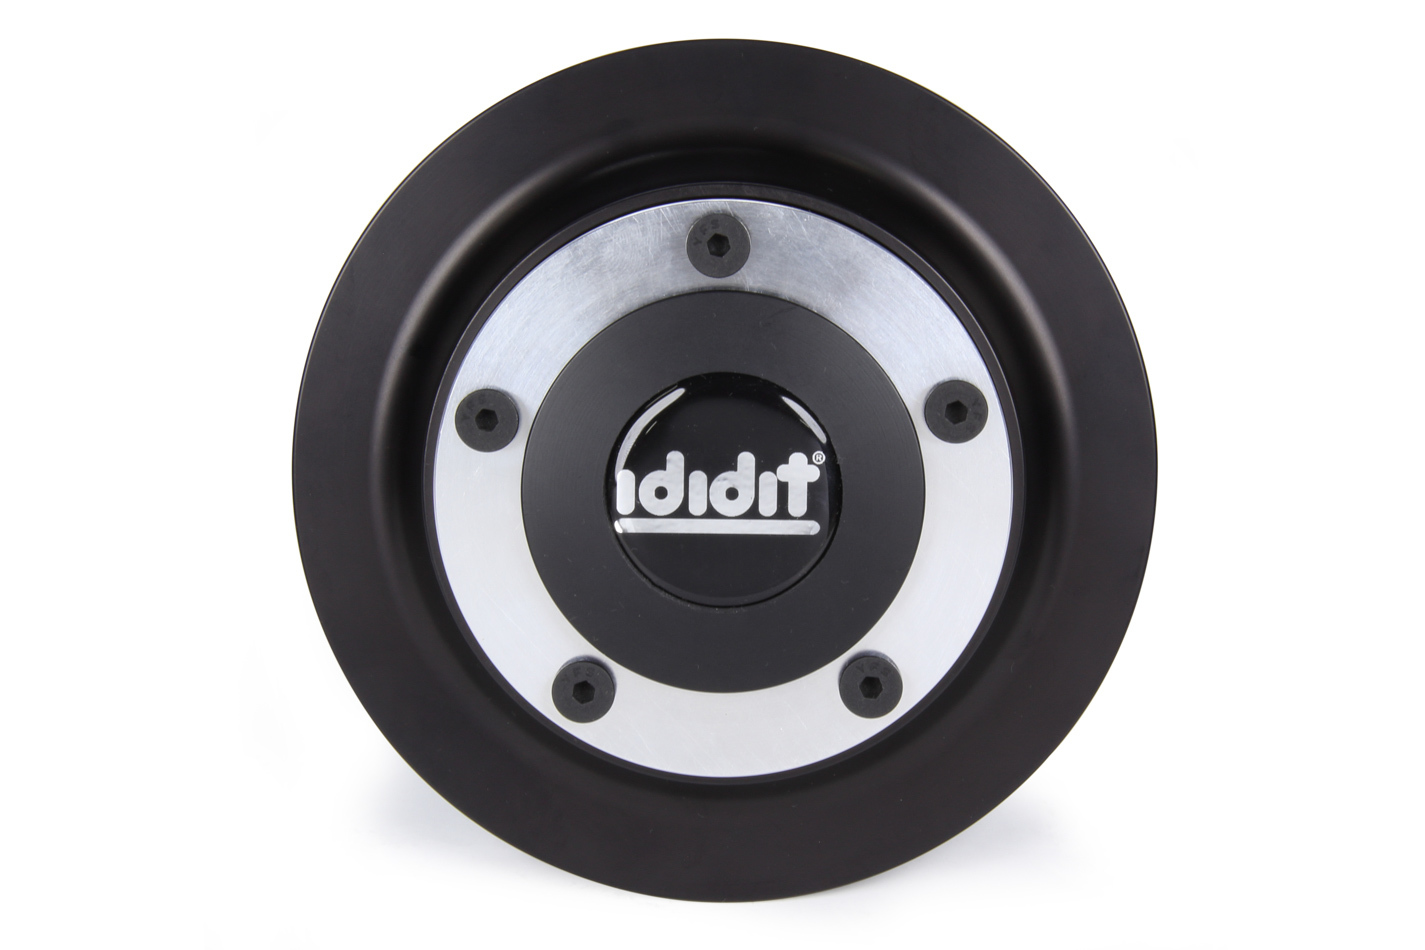 Ididit 5010000020 Steering Wheel Quick Release, 360 Degree Release, 5 Bolt, SFI 42.1, Spline, Aluminum, Black Anodized / Brushed, Ford 40 Spline Shaft, Kit